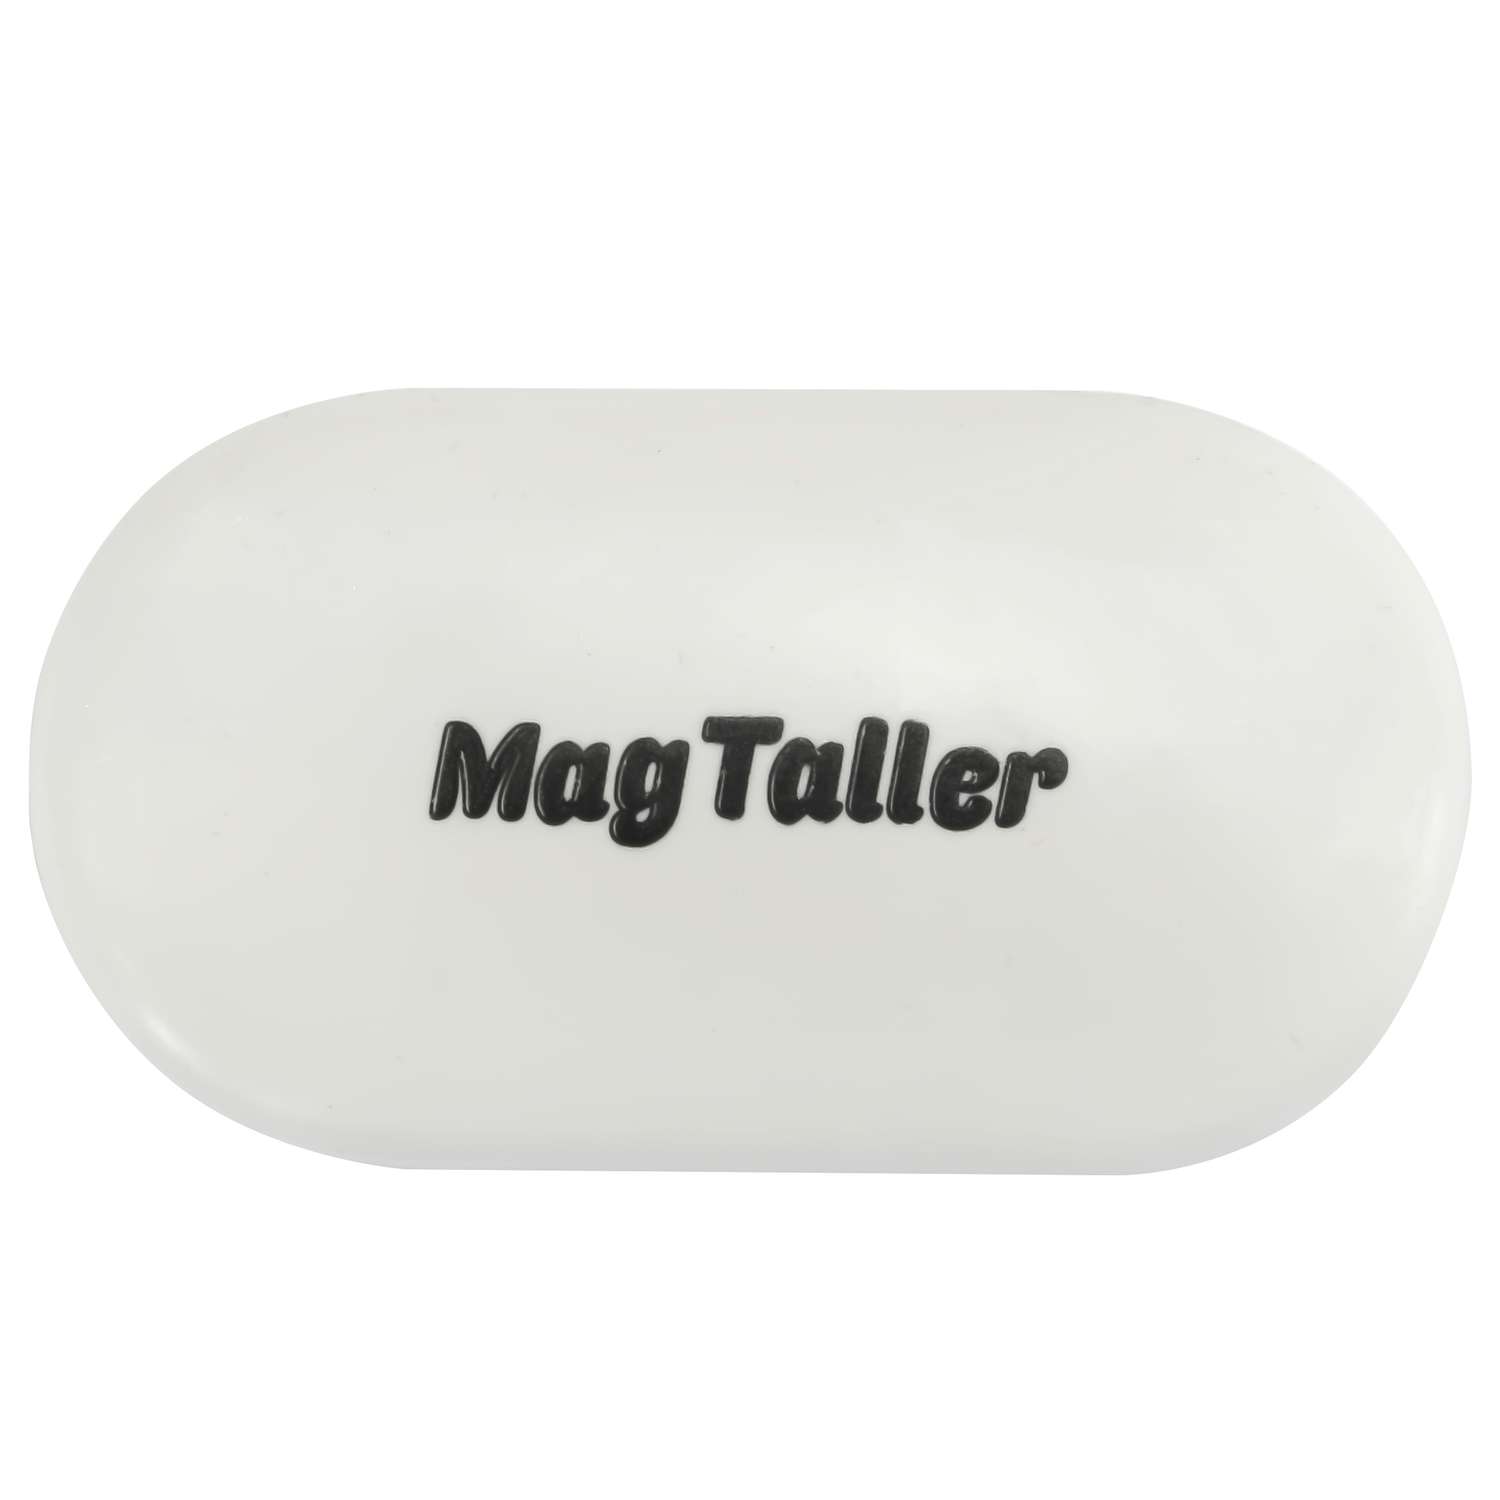 Ластик Magtaller 605005 - фото 1